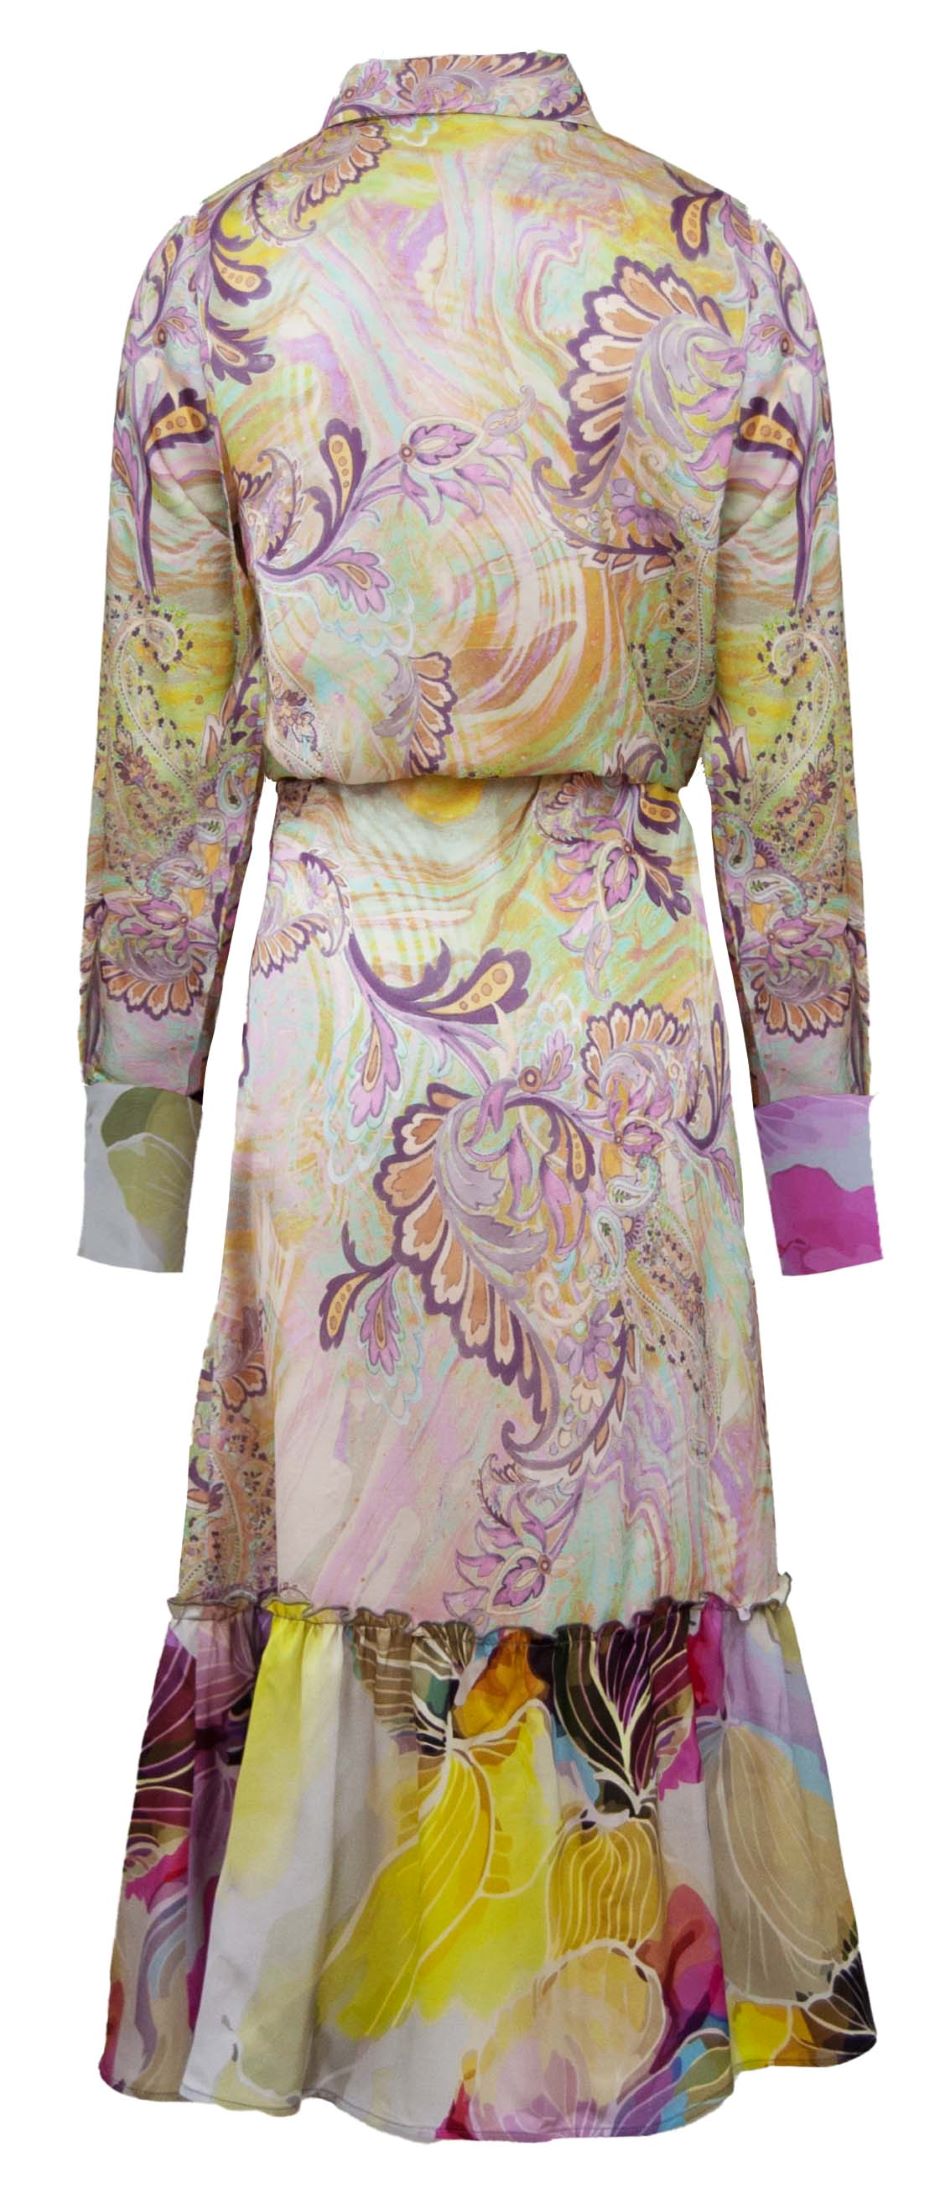 Floer Blusenkleid lang mit Floralprint | SEGO Fashion Shop